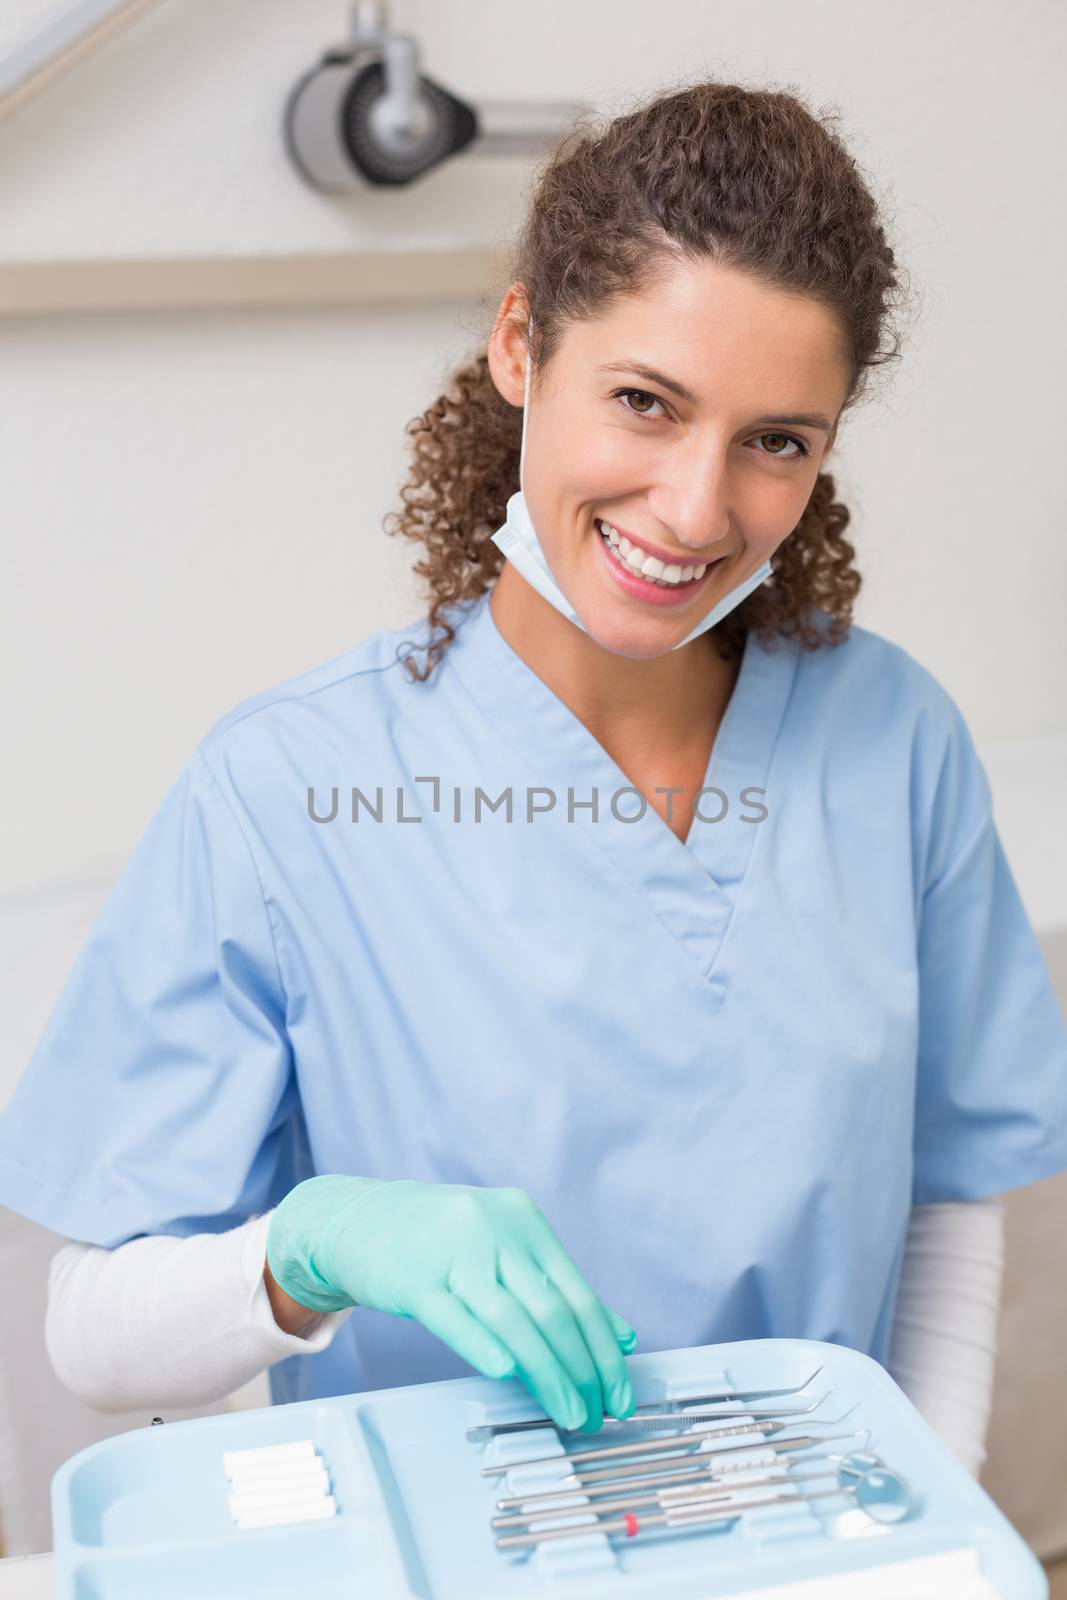 Dentist smiling at camera while picking up tools at the dental clinic